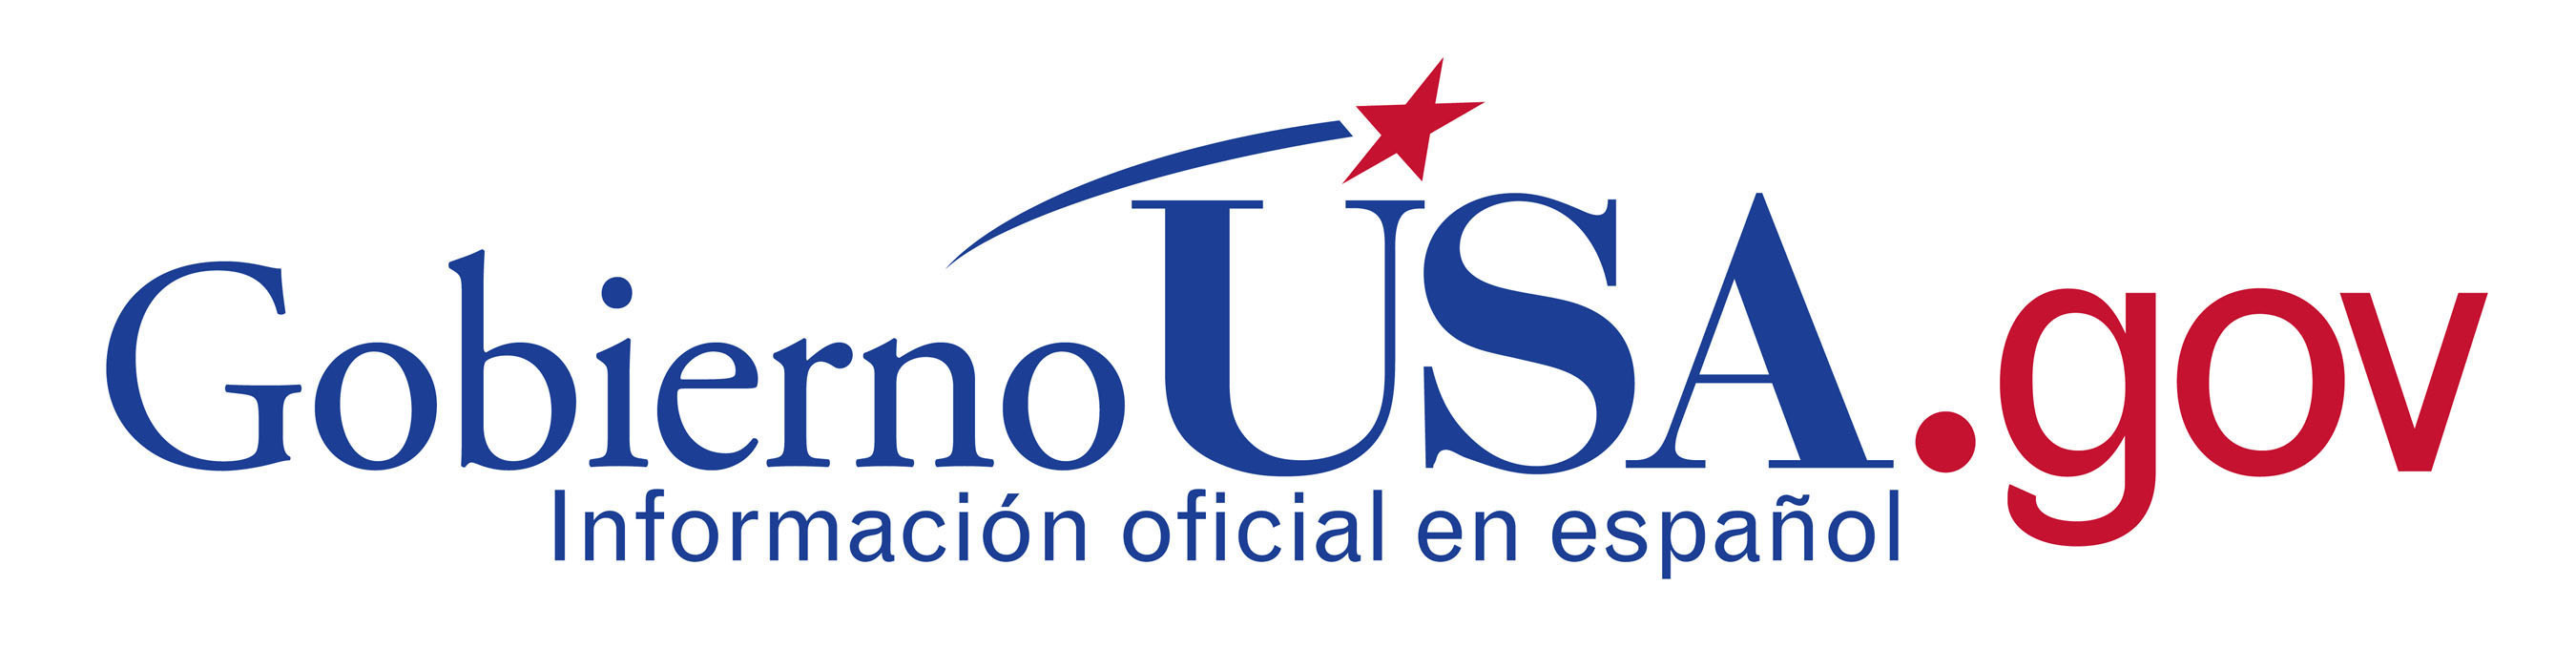 GobiernoUSA.gov logo